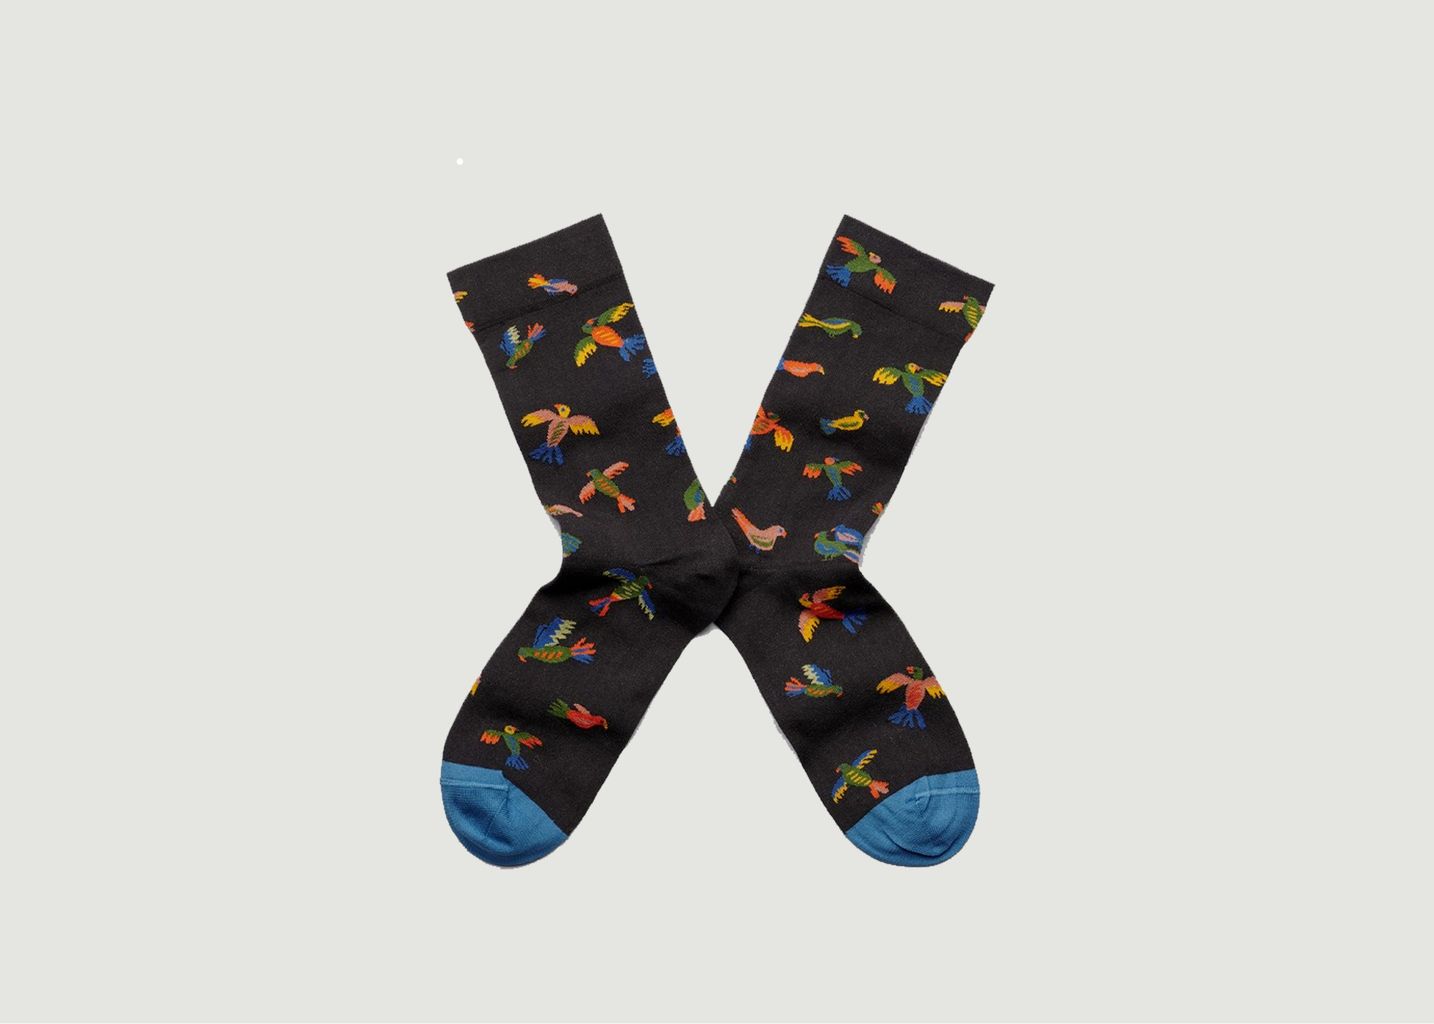 Birds socks with contrasting toe - Bonne Maison